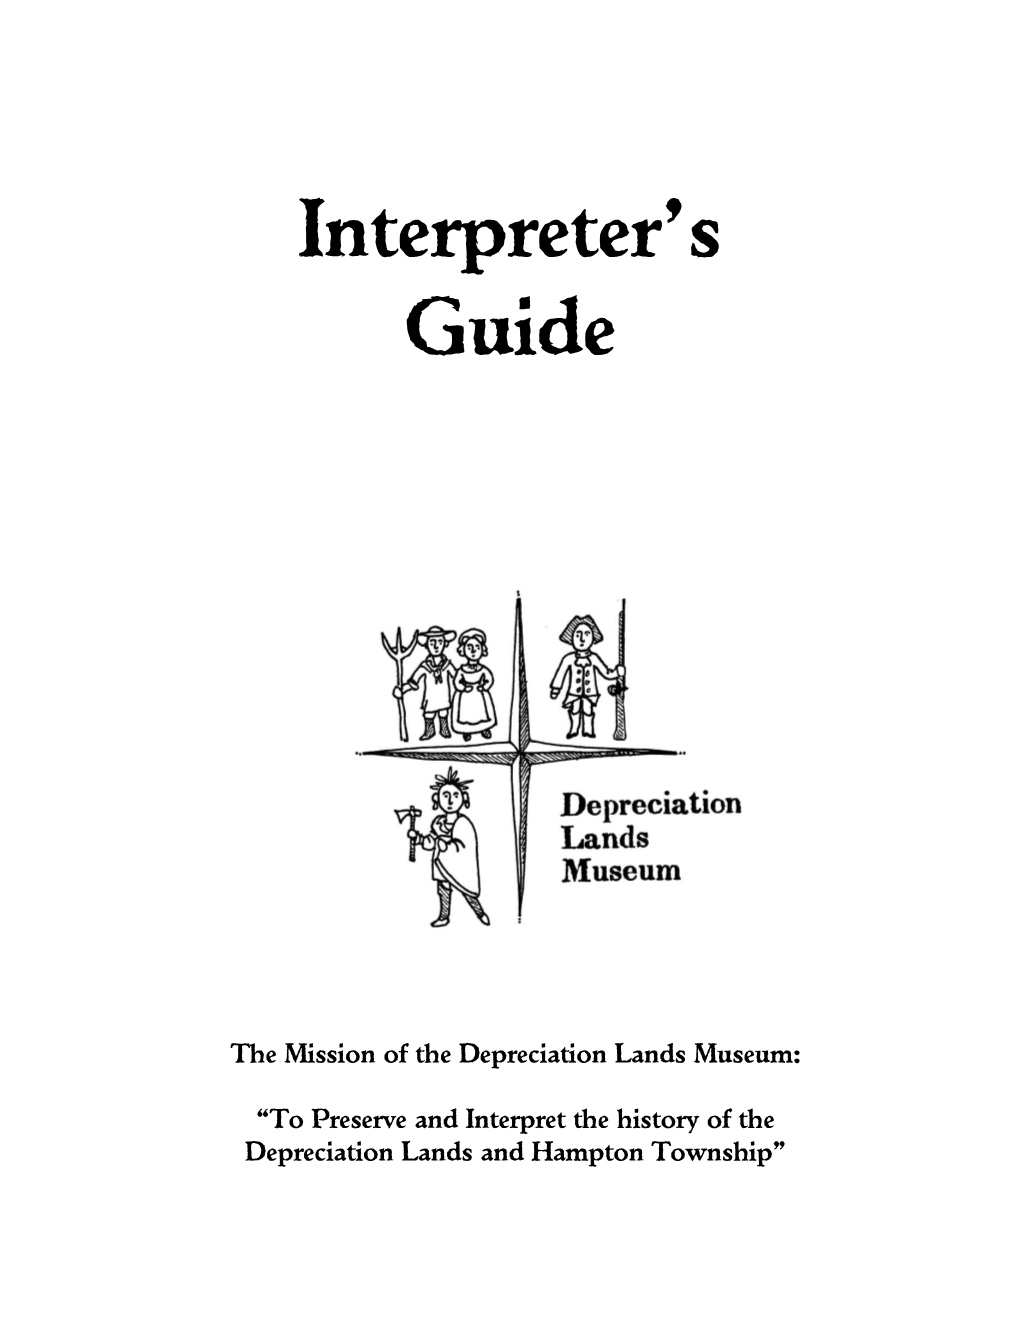 The Depreciation Lands Museum Interpreter's Guide